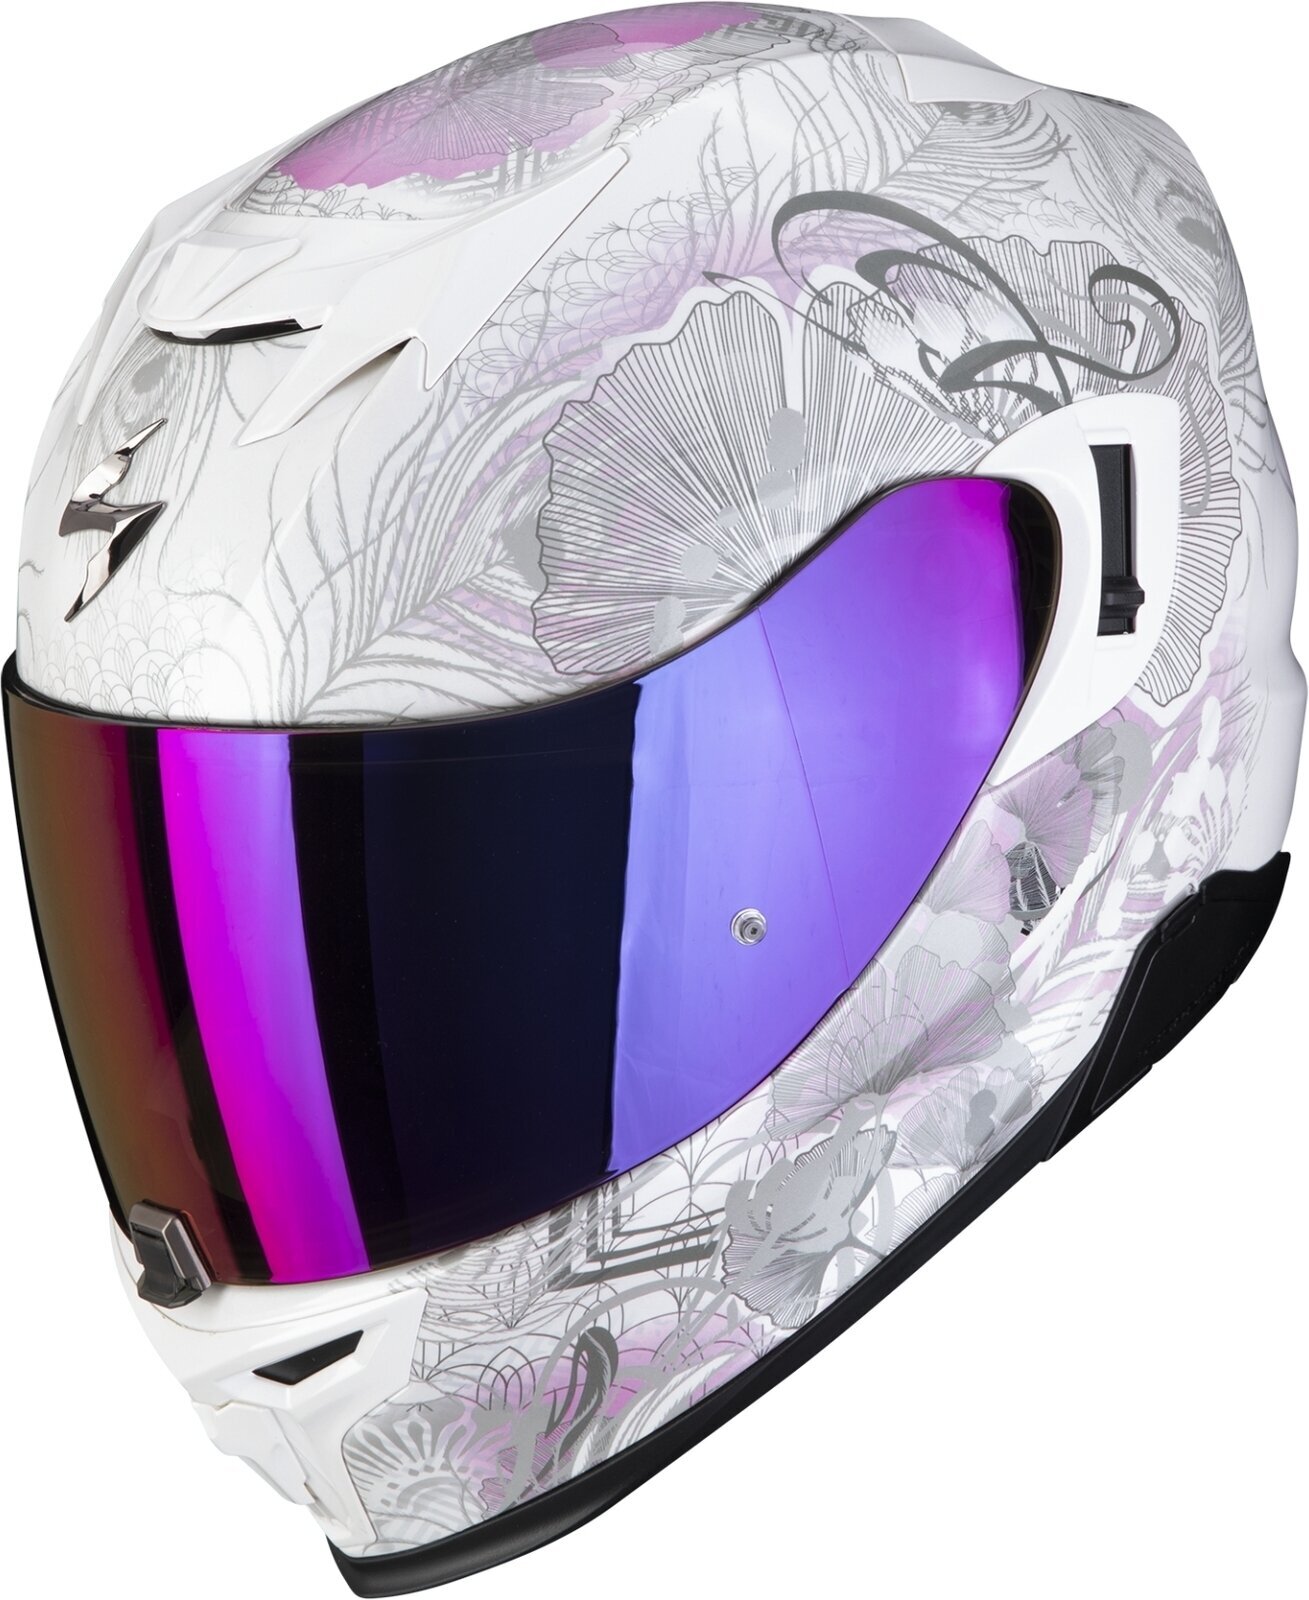 Helm Scorpion EXO 520 EVO AIR MELROSE Pearl White/Pink M Helm